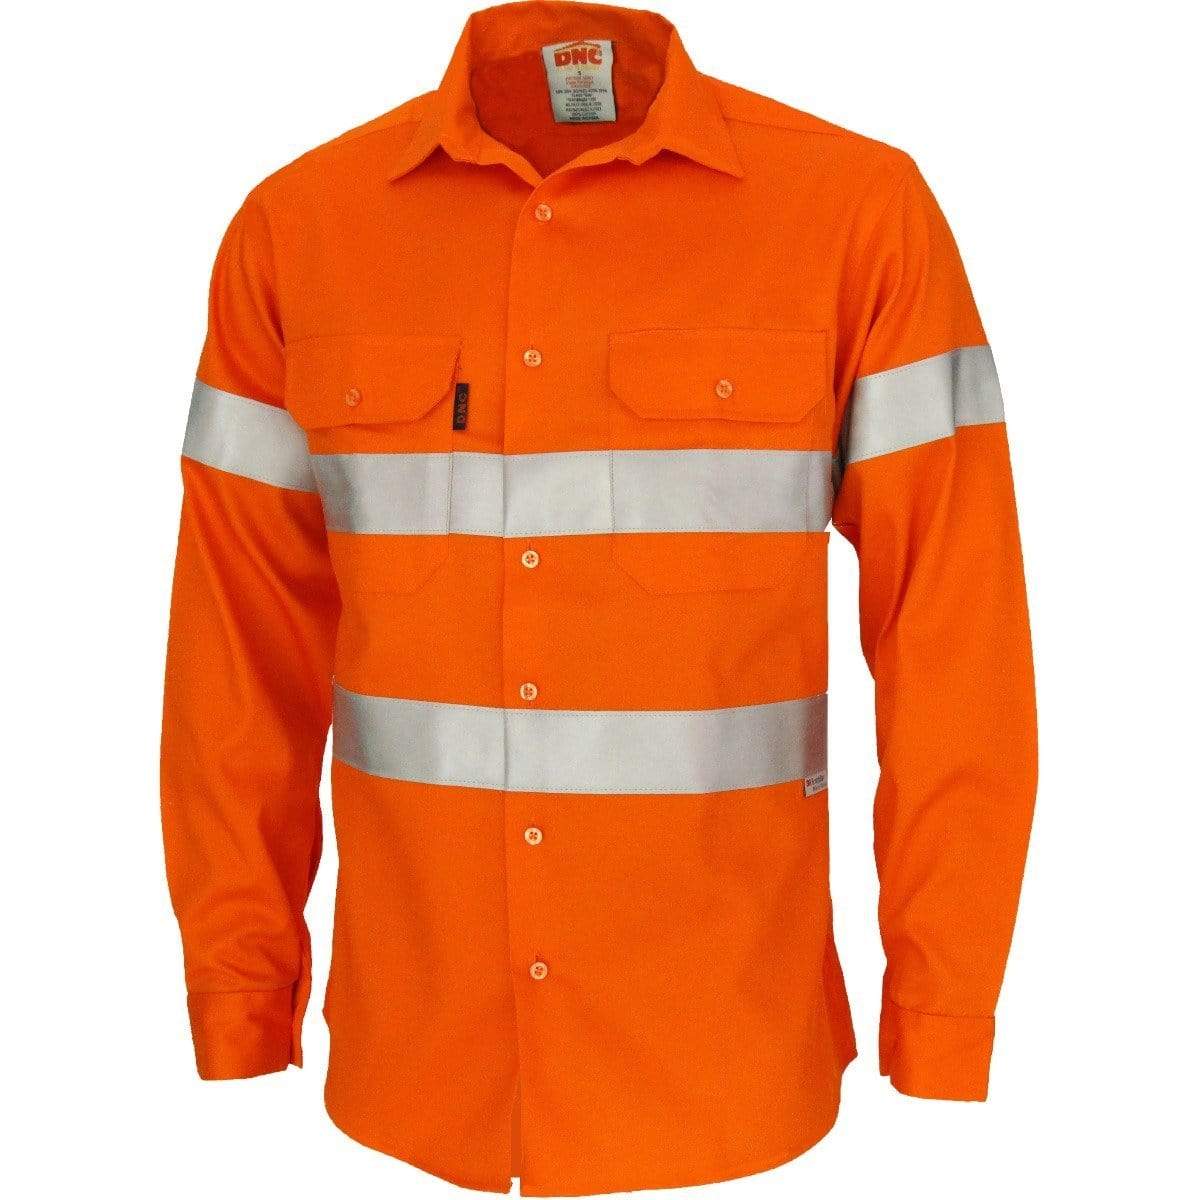 Dnc Workwear Patron Saint Flame Retardant Arc Rated Long Sleeve Taped Shirt With 3m Fr Tape - 3405 Work Wear DNC Workwear Orange XS 